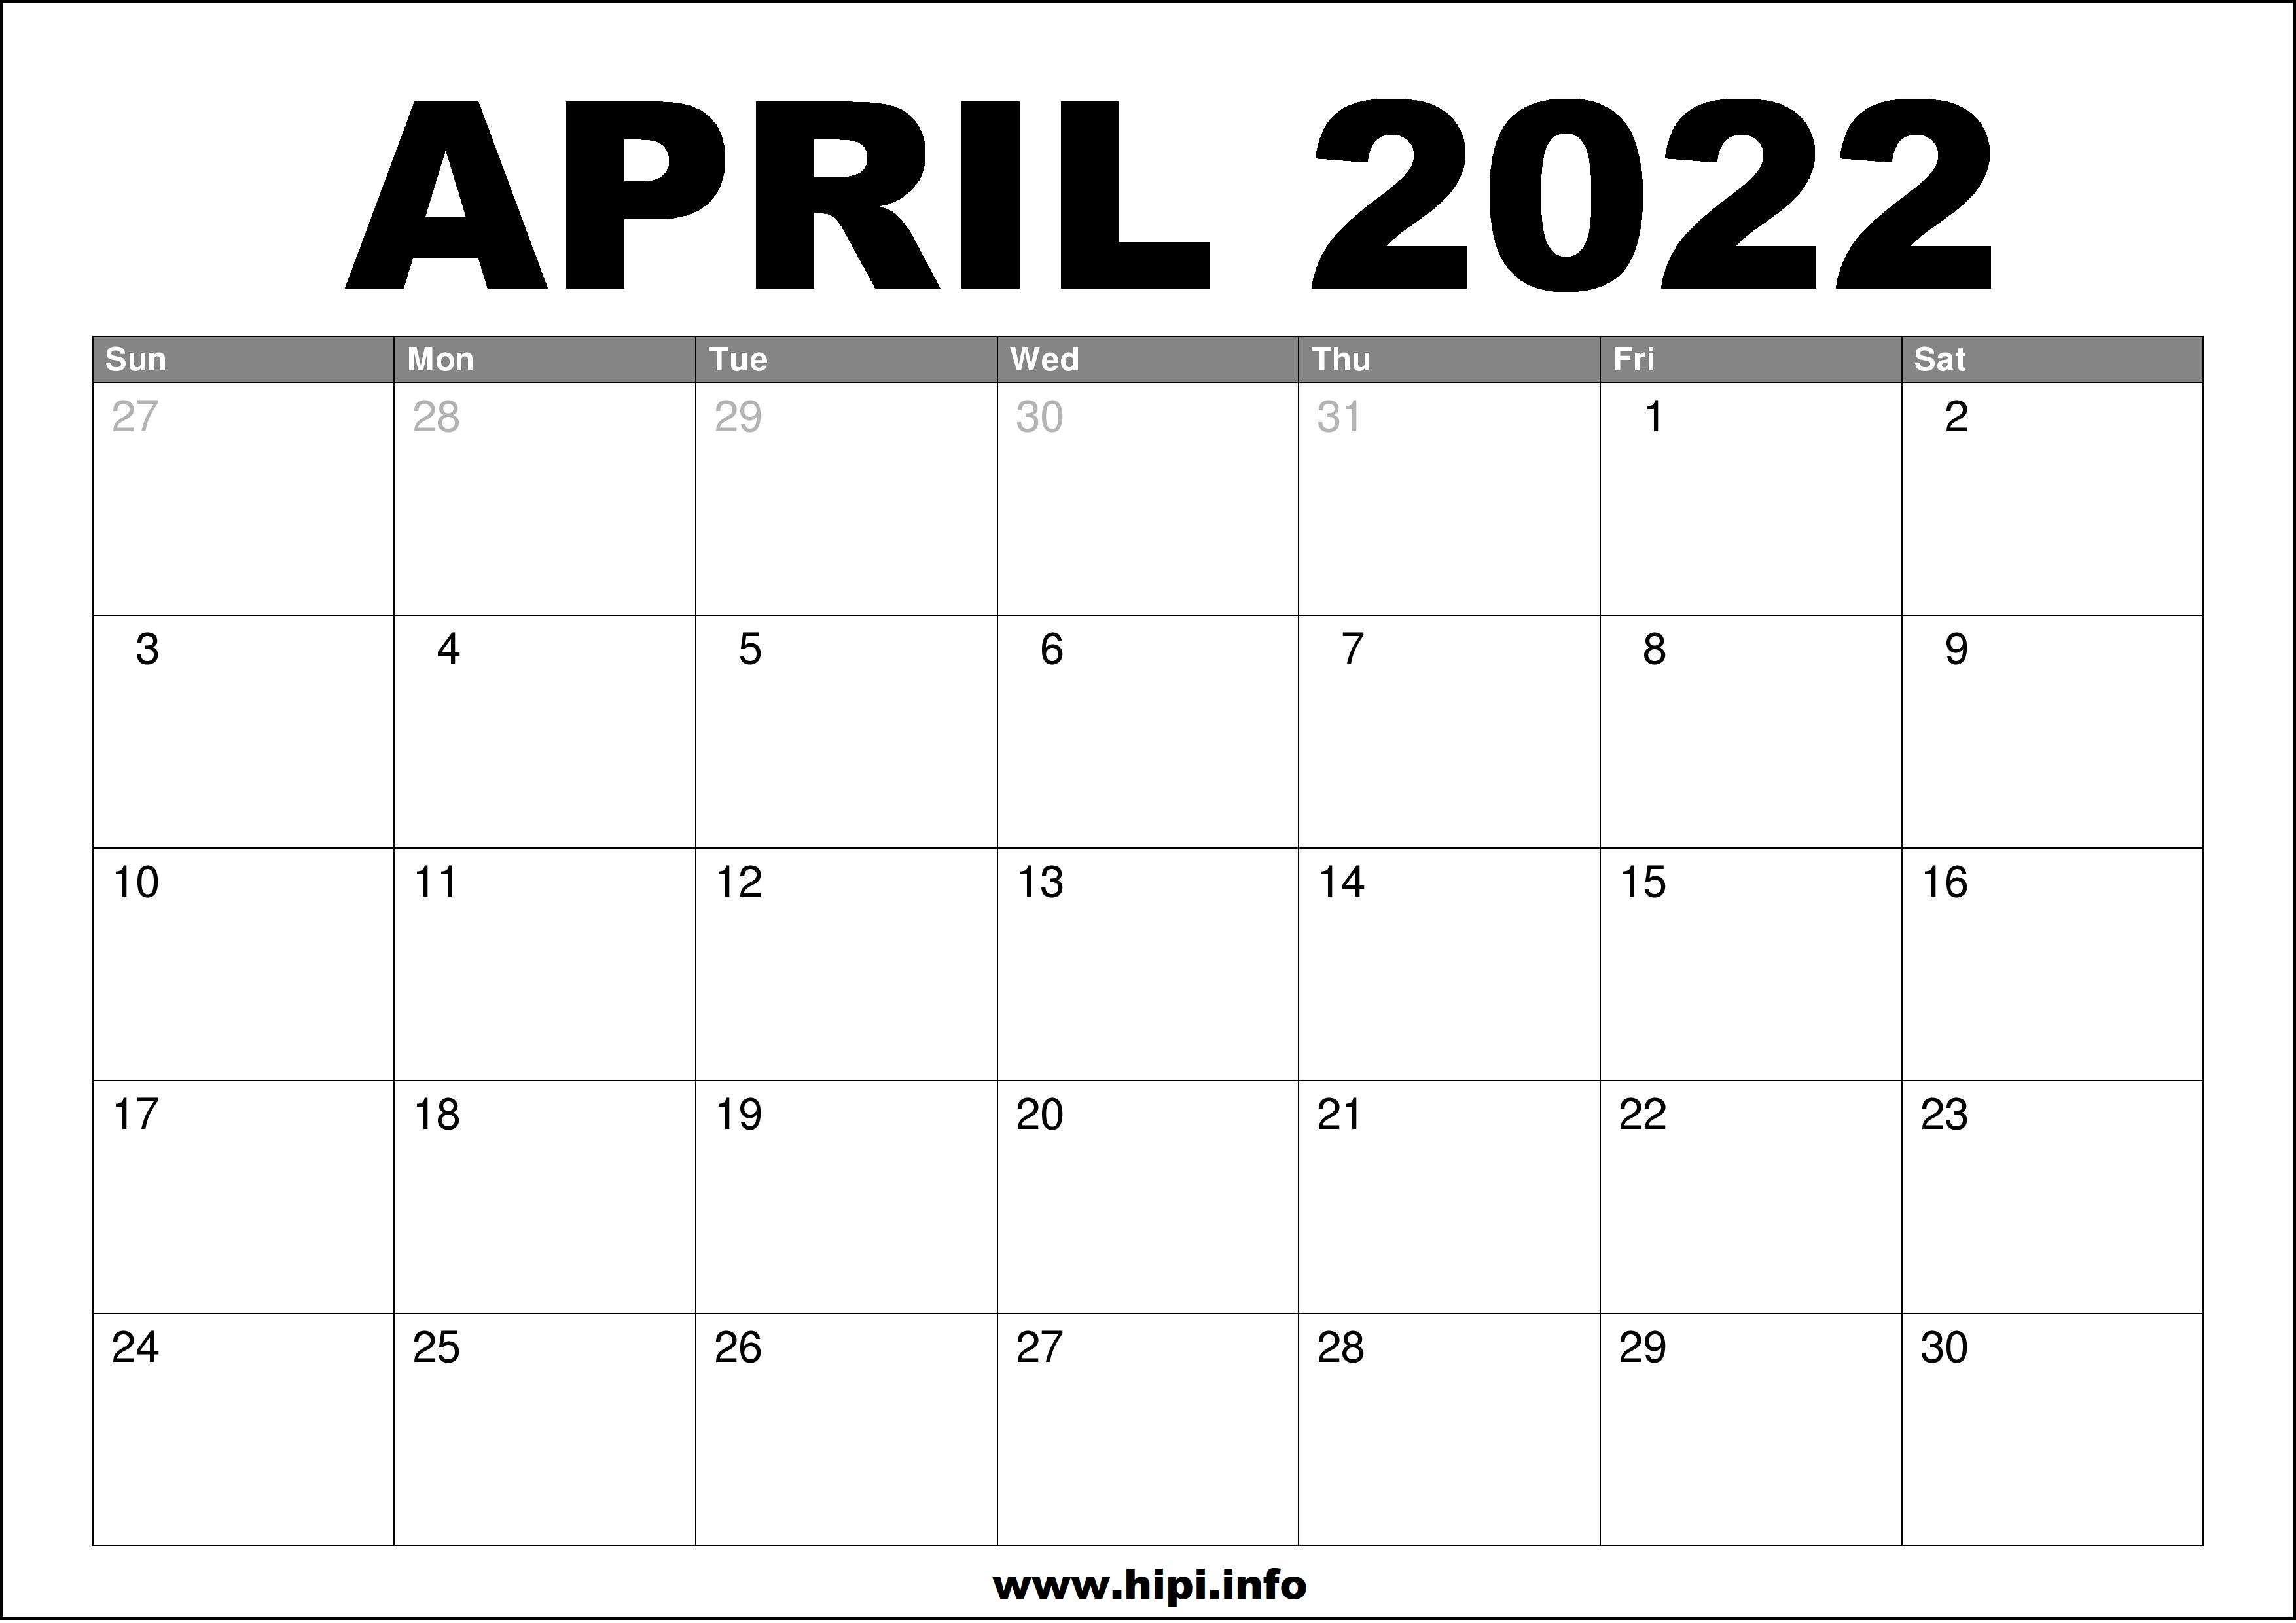 Free Printable April 2022 Calendar April 2022 Calendar Printable Free - Hipi.info | Calendars Printable Free